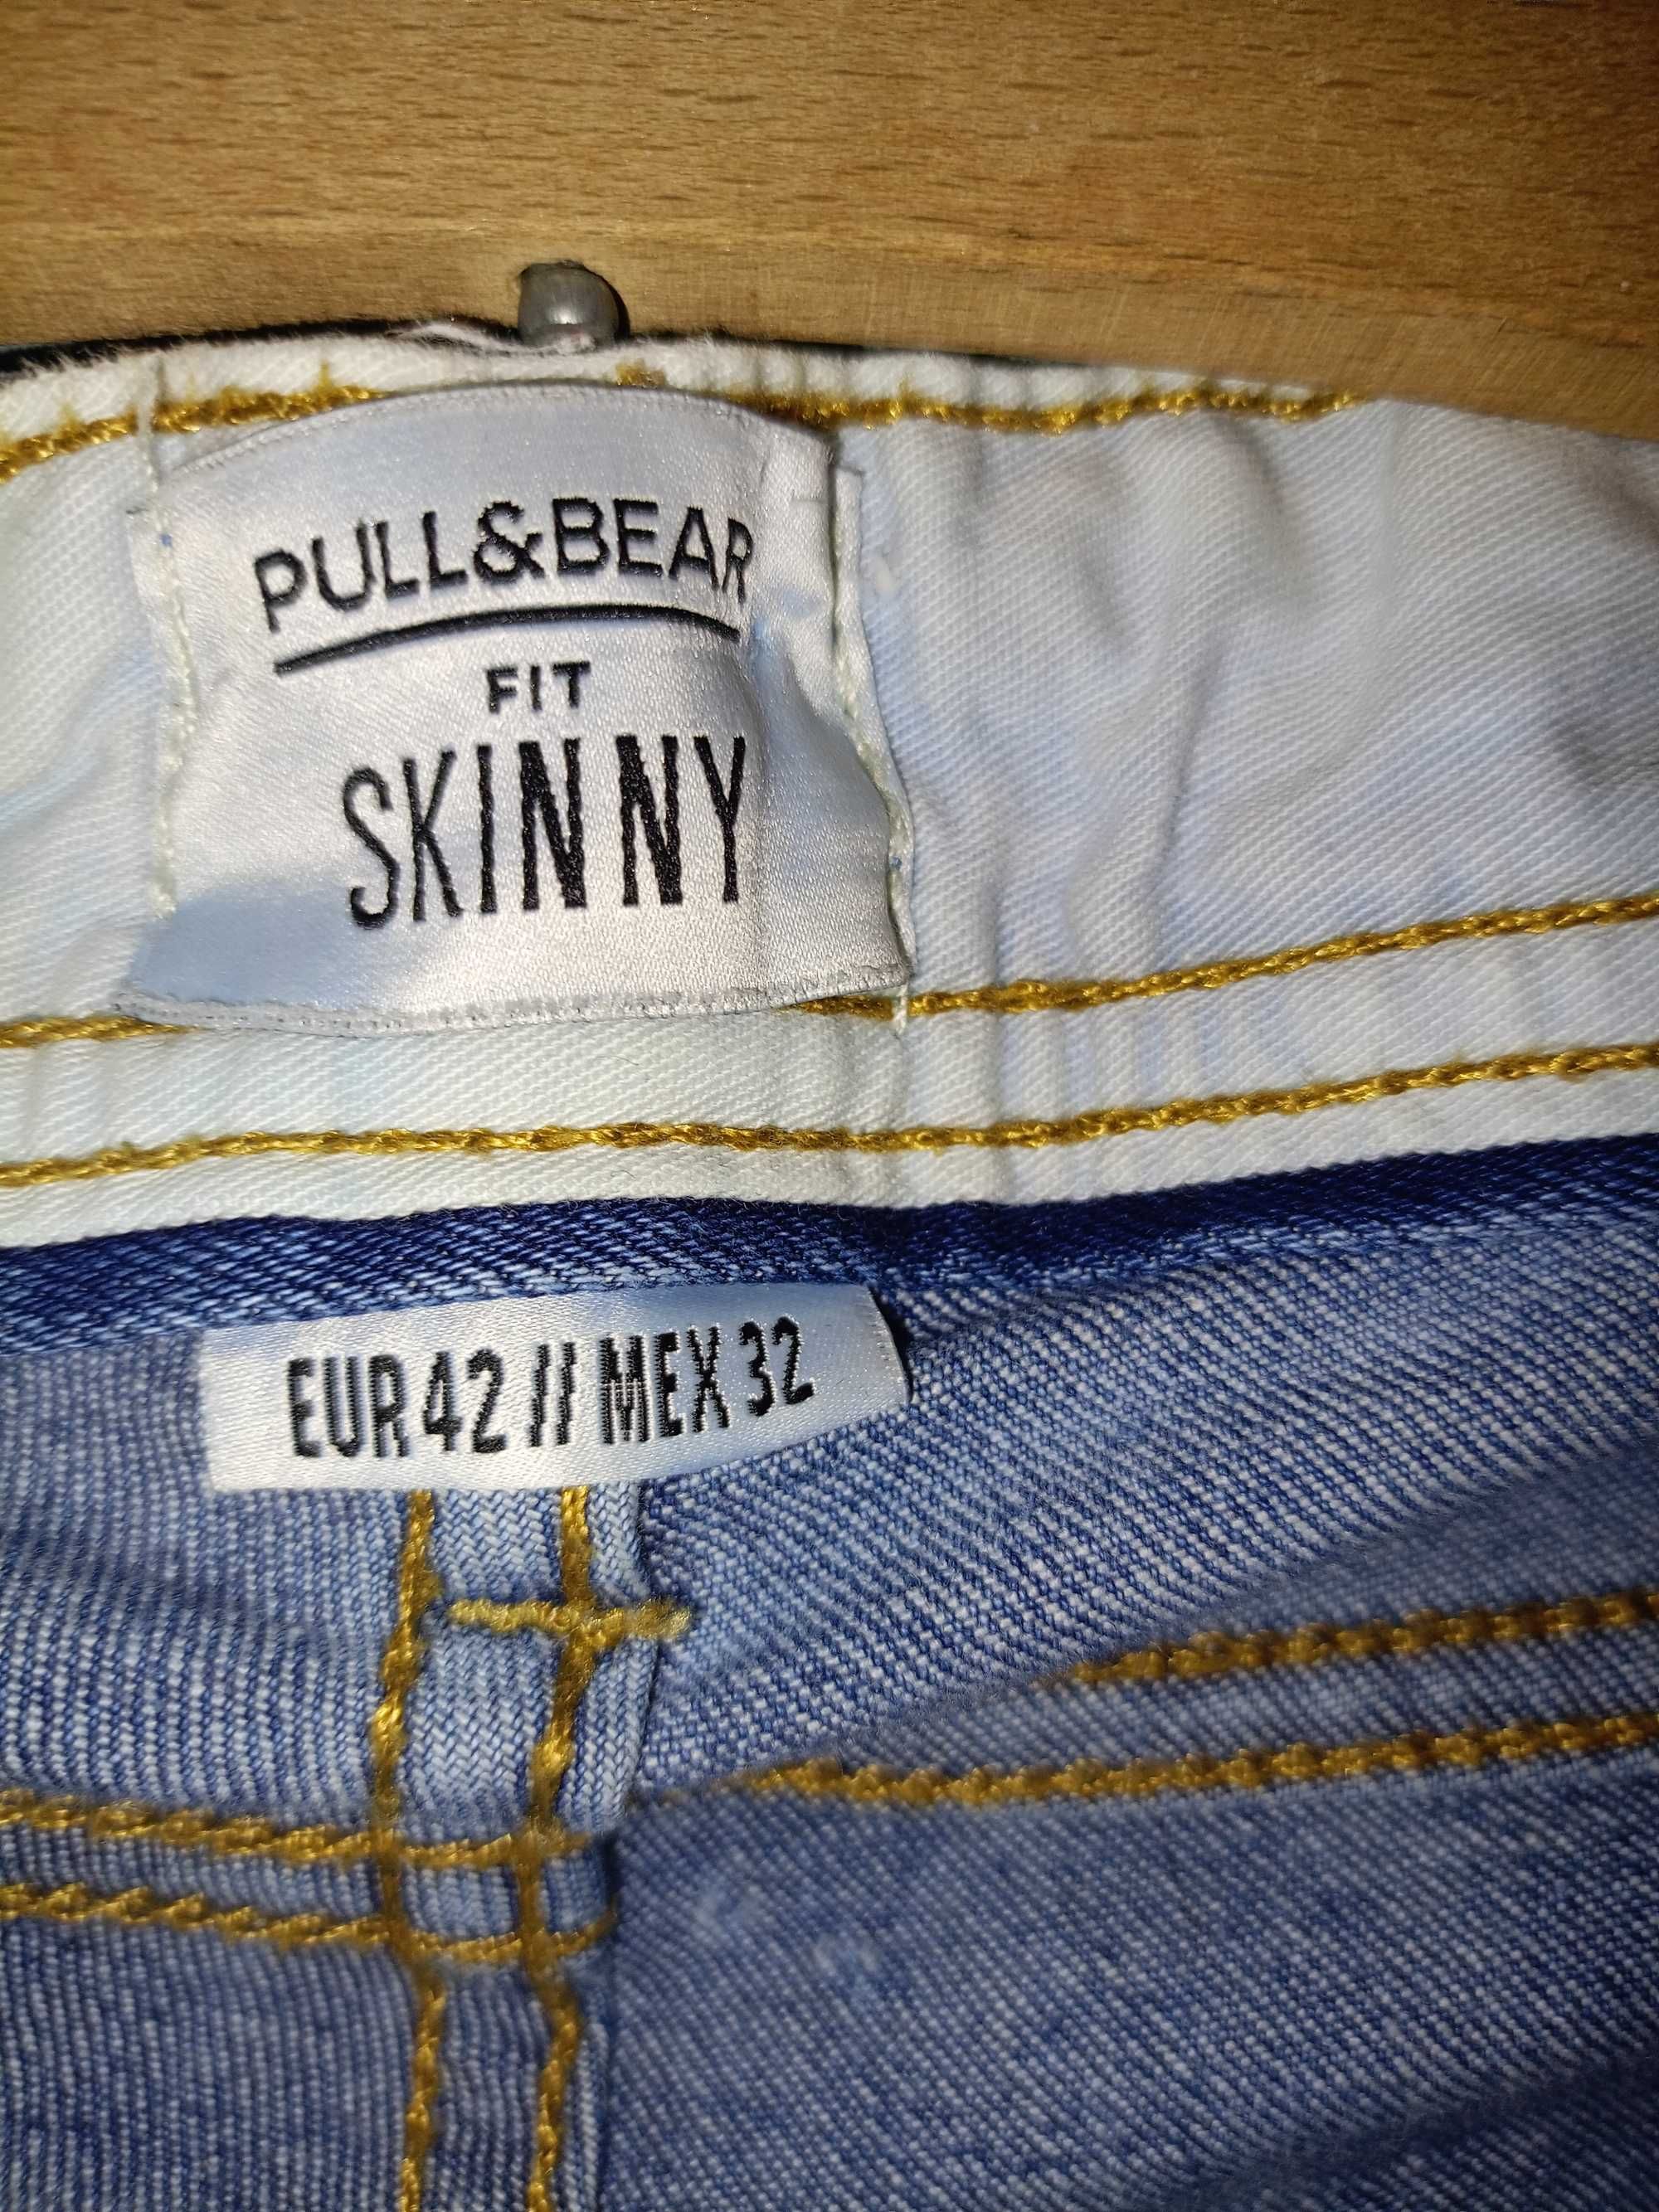 Spodnie męskie Skinny firmy Pull&Bear